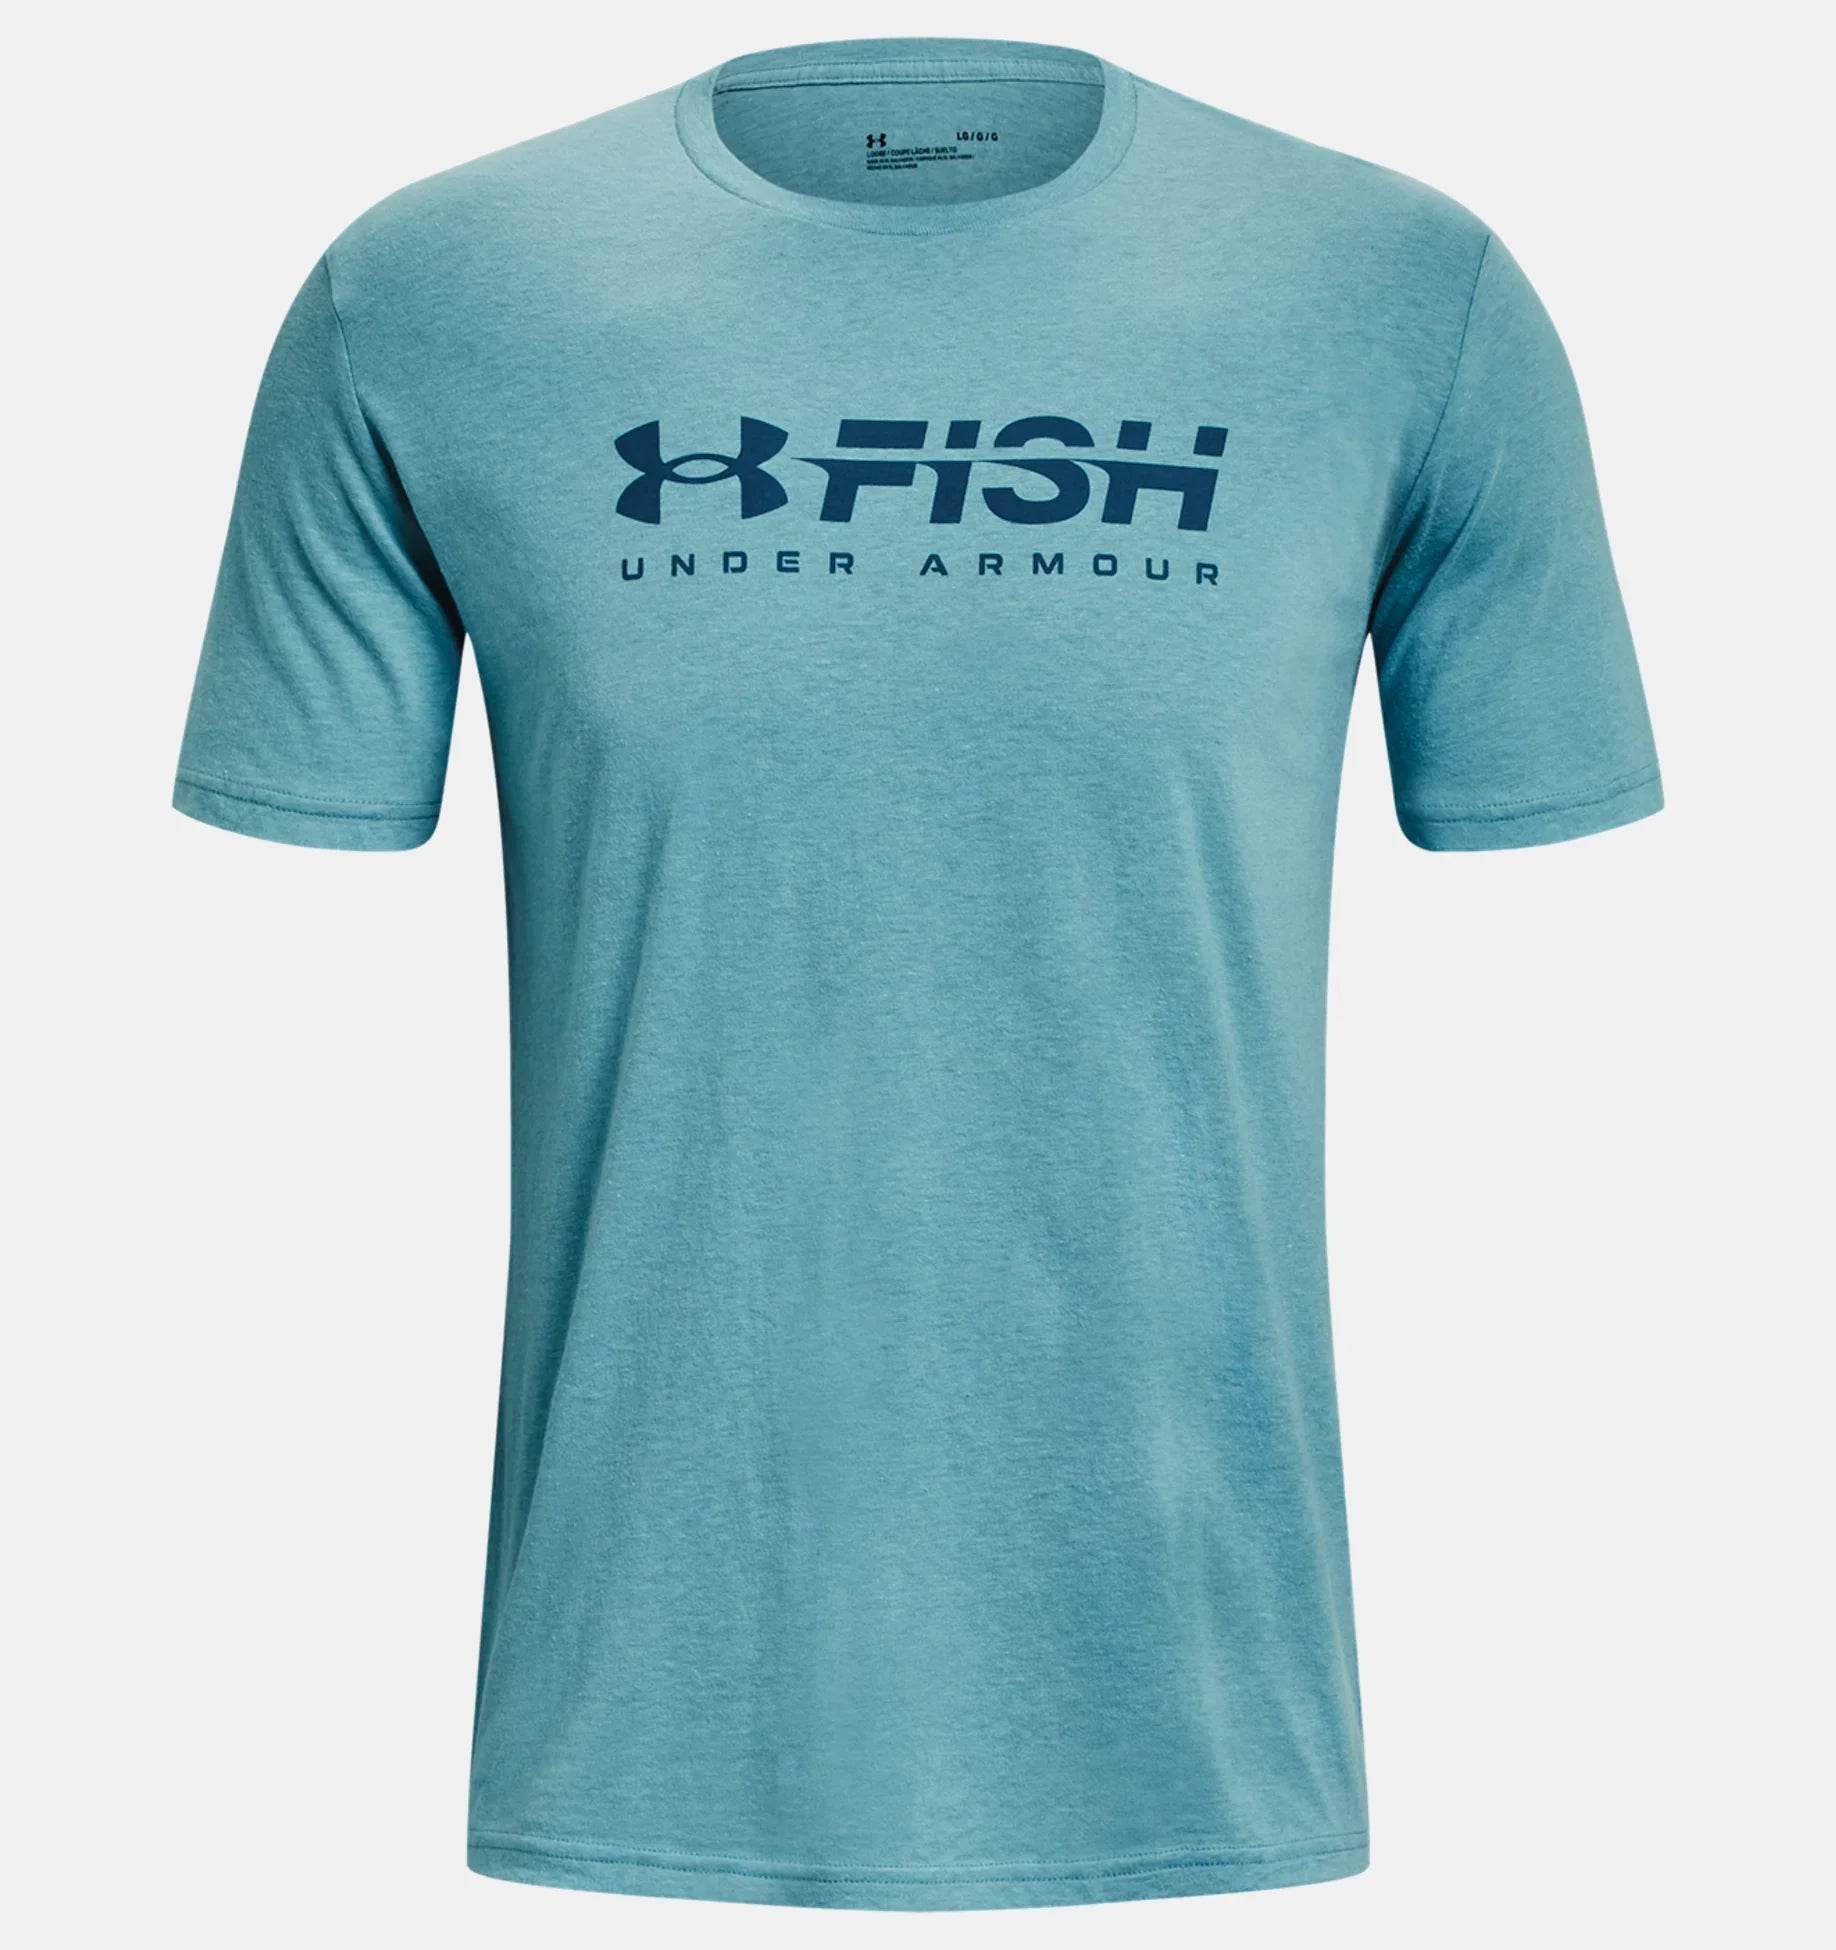 Under Armour Men's Fish Strike T-Shirt - Blue, LG